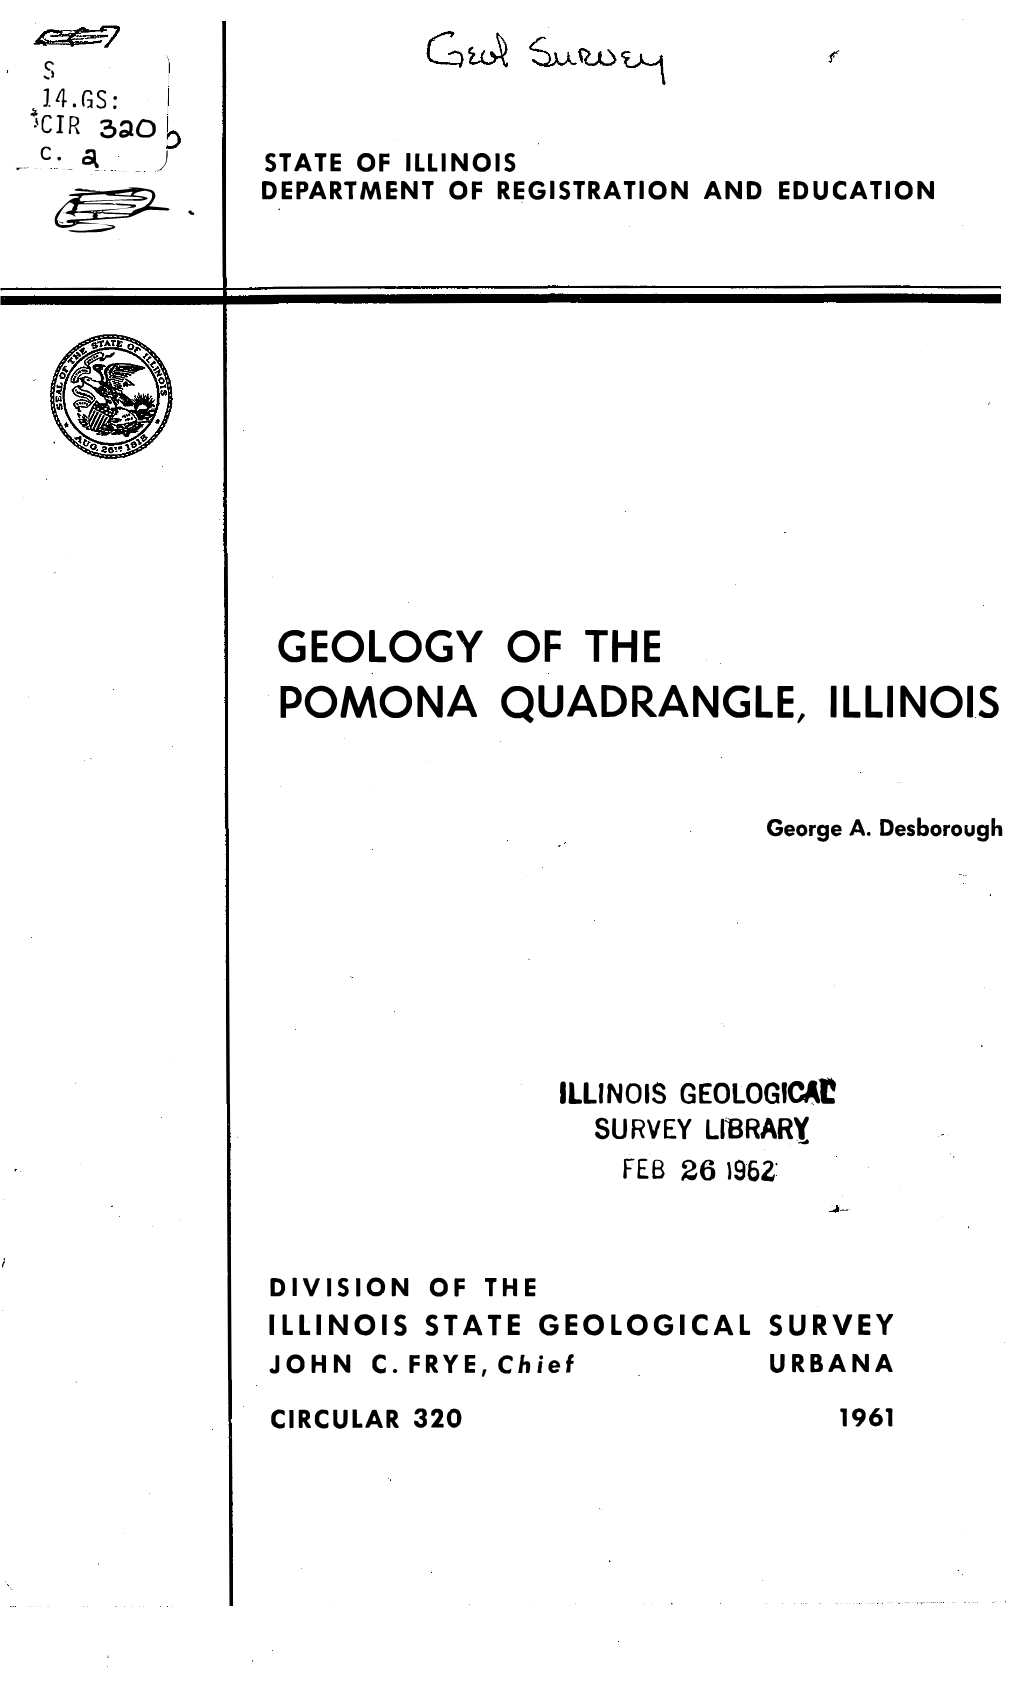 Geology of the Pomona Quadrangle, Illinois